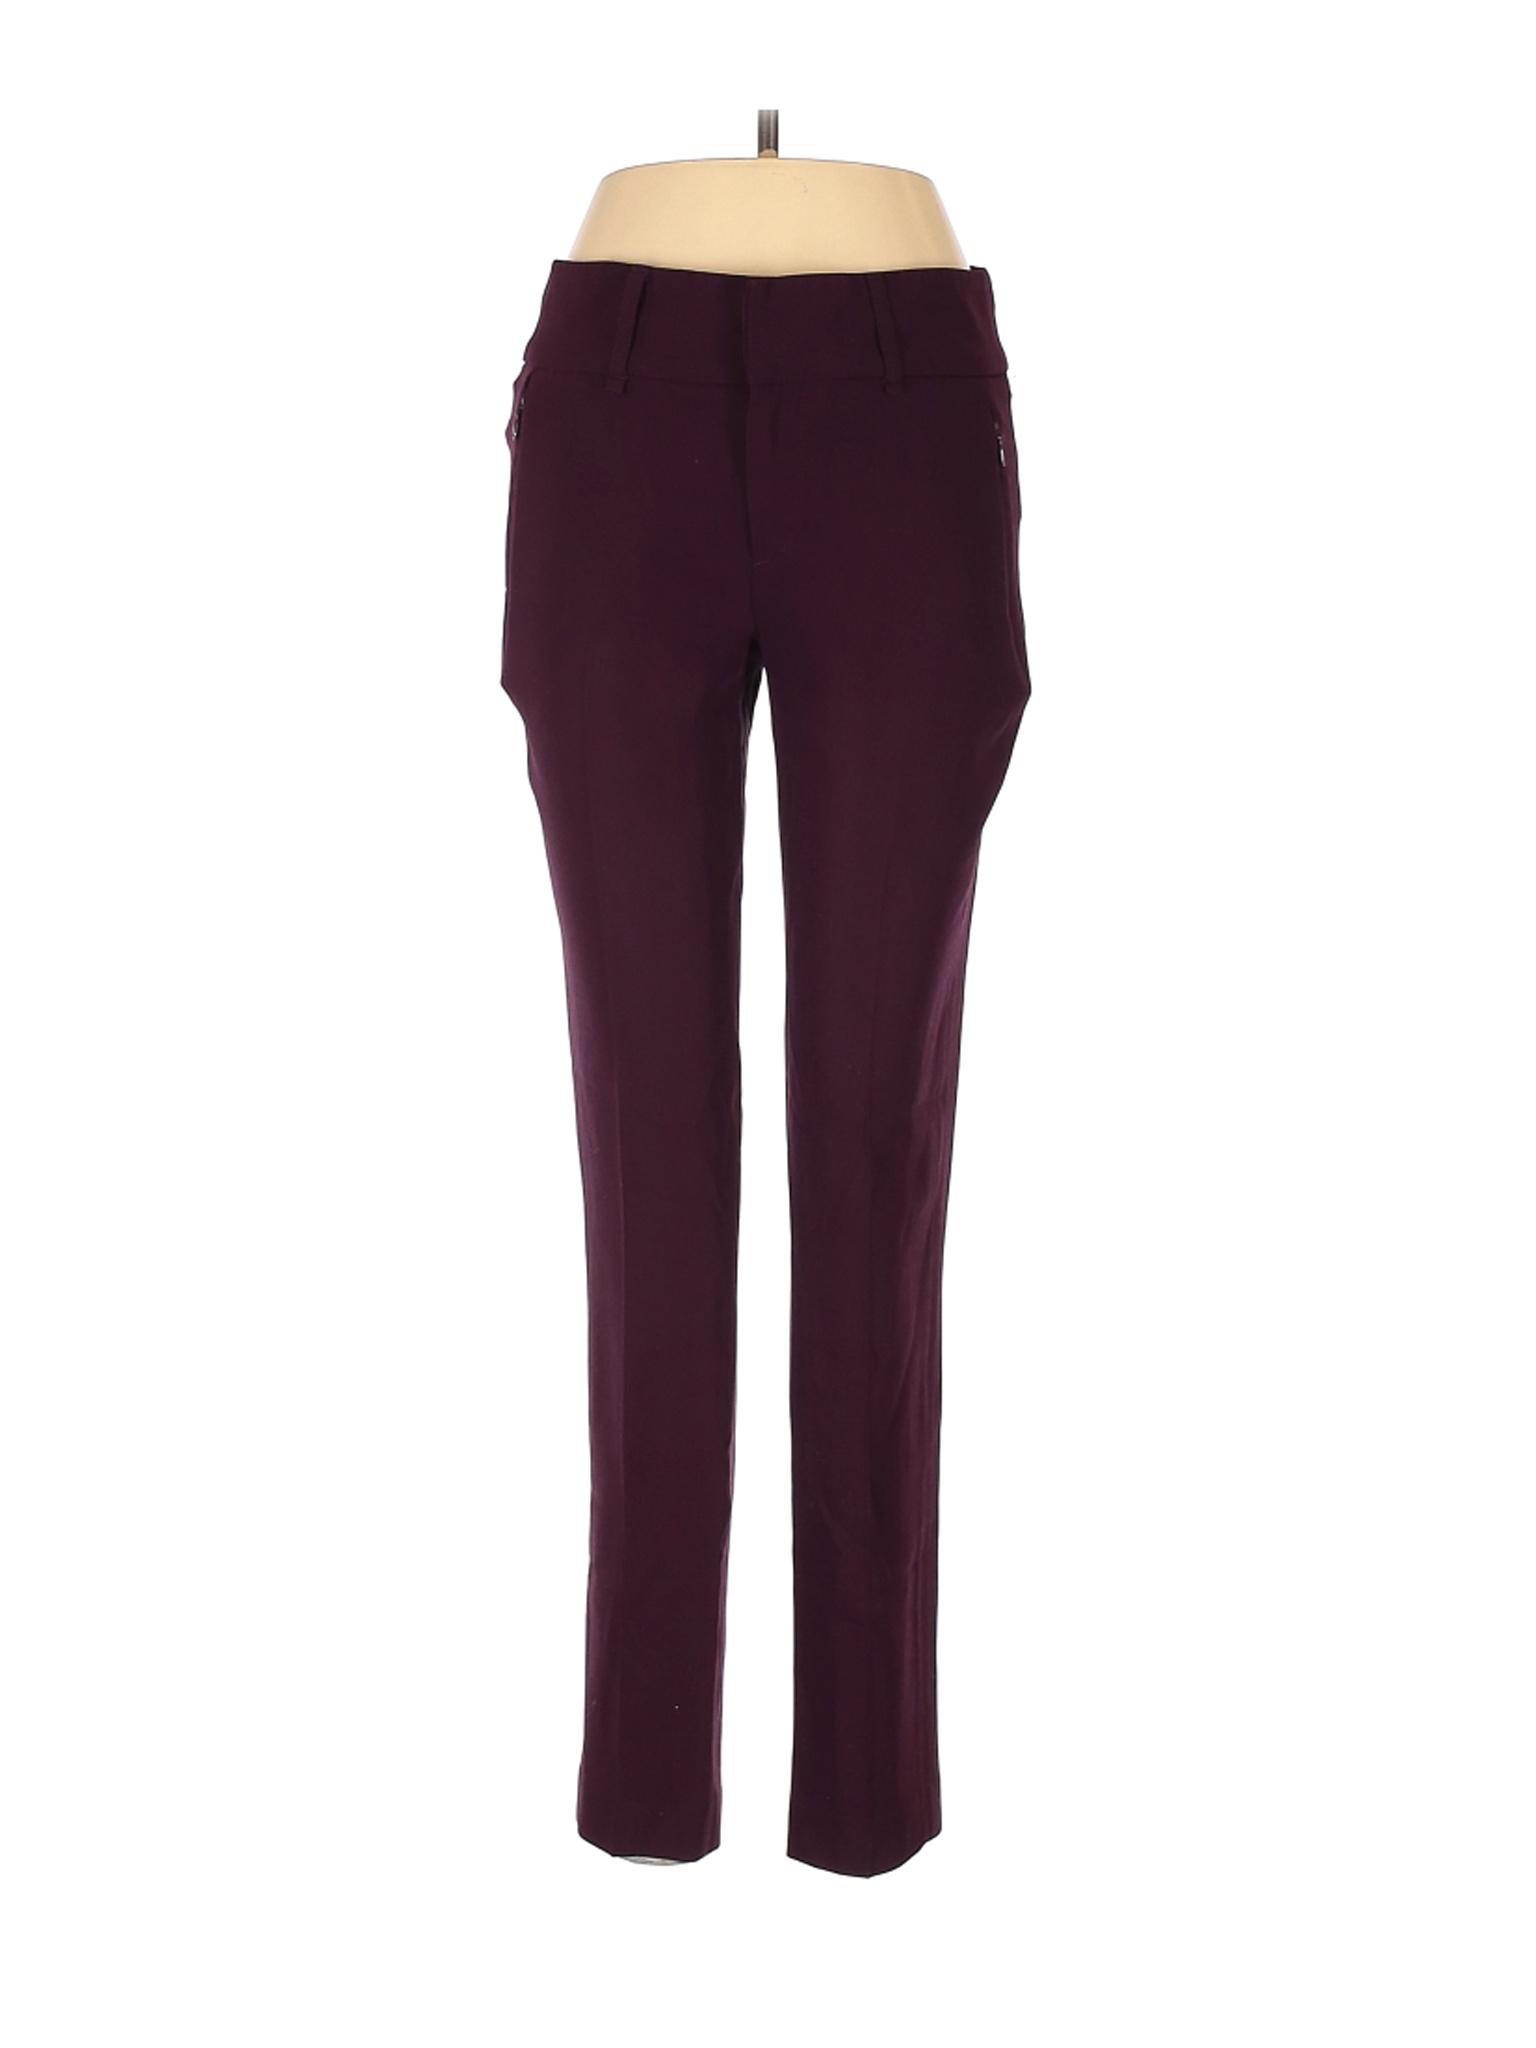 Rag & Bone Women Purple Dress Pants 2 | eBay